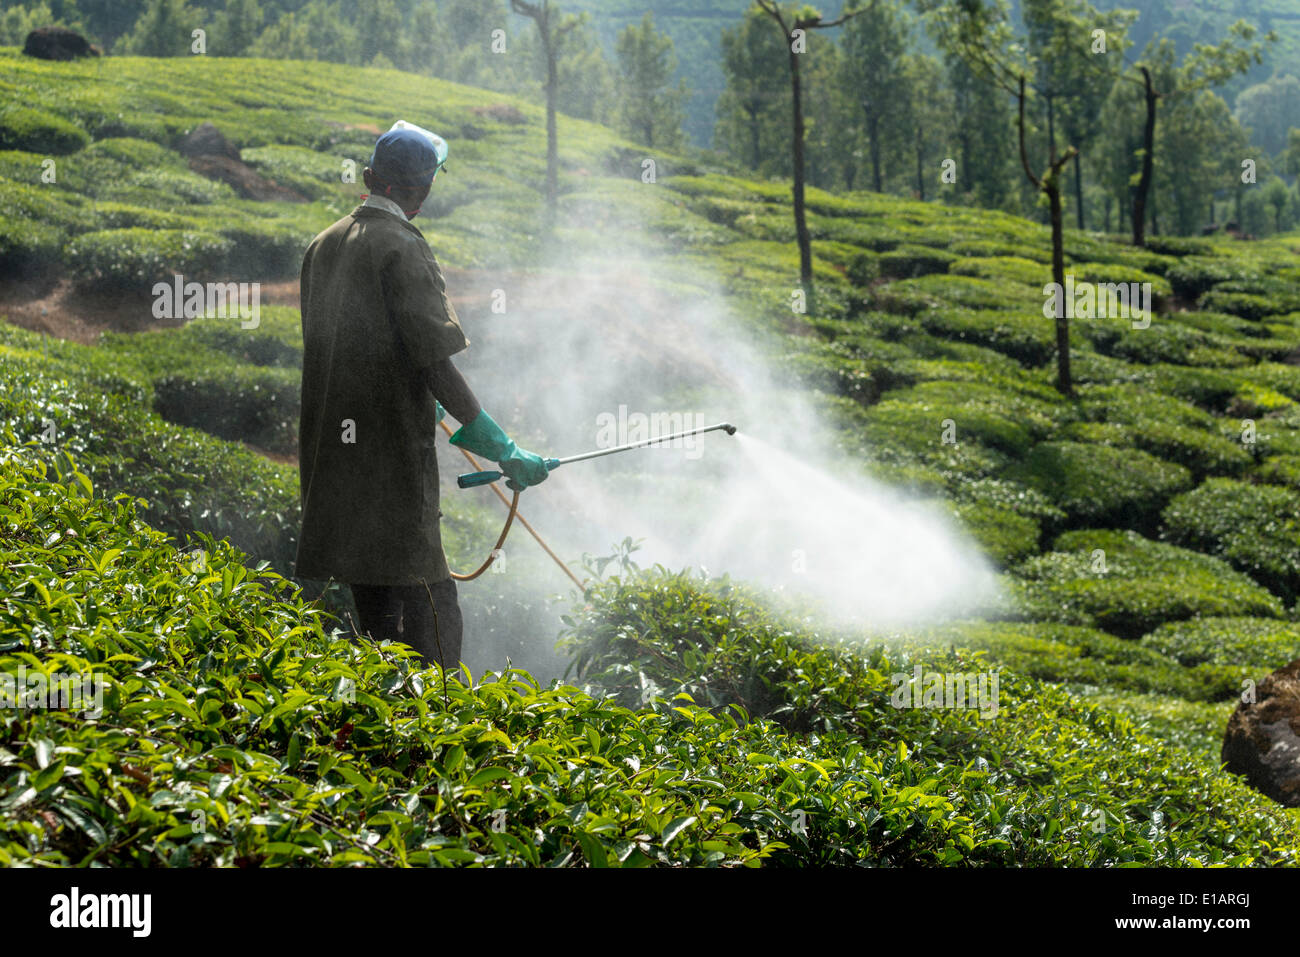 Worker spraying tea plants with pesticides, tea plantation, Munnar, Kerala, Western Ghats, India Stock Photo